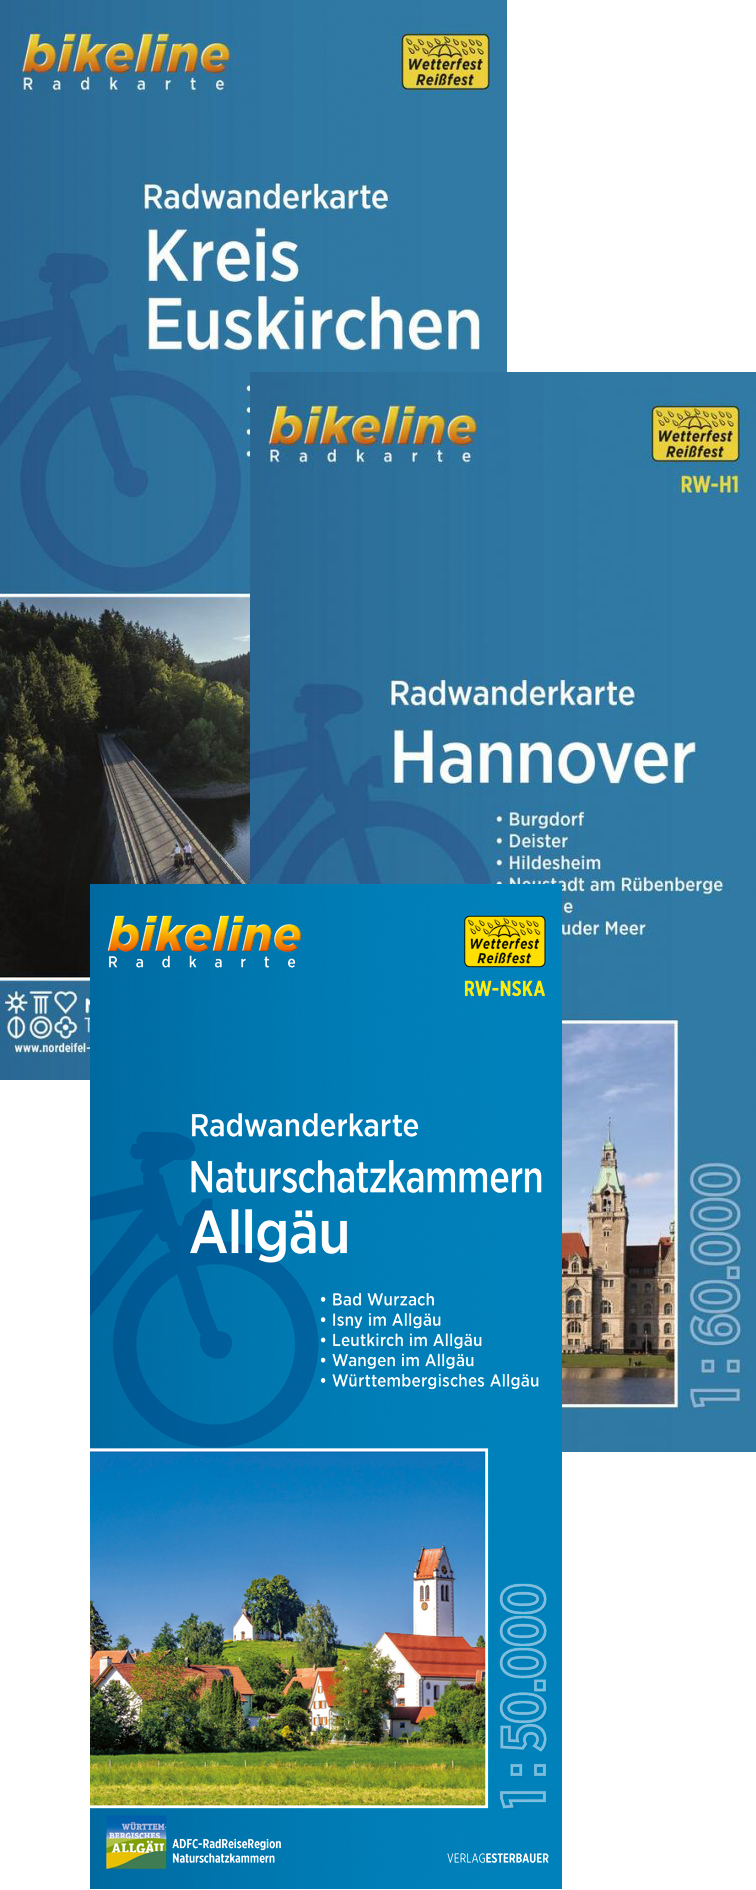 bikeline radwanderkarten